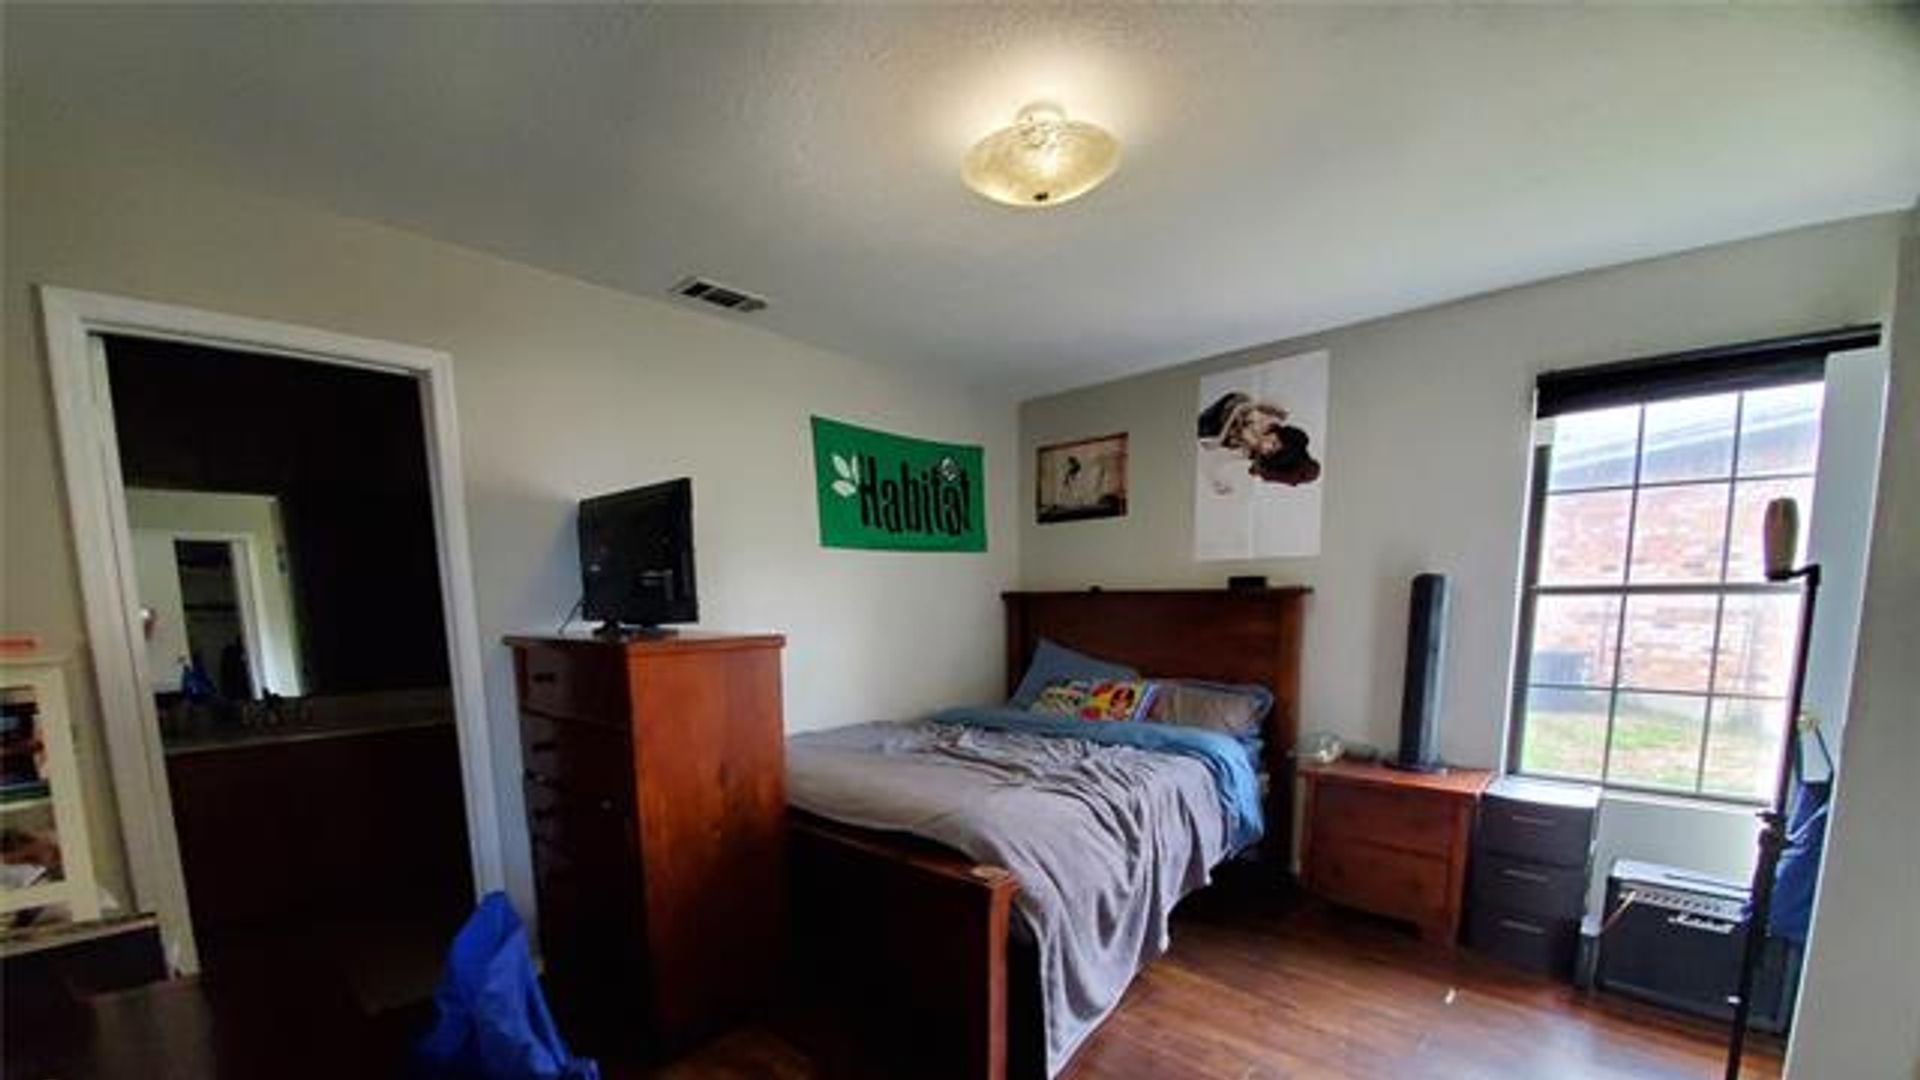 4 bed duplex at 2310 Birchbrook Court, Denton, TX 76205, USA | For rent